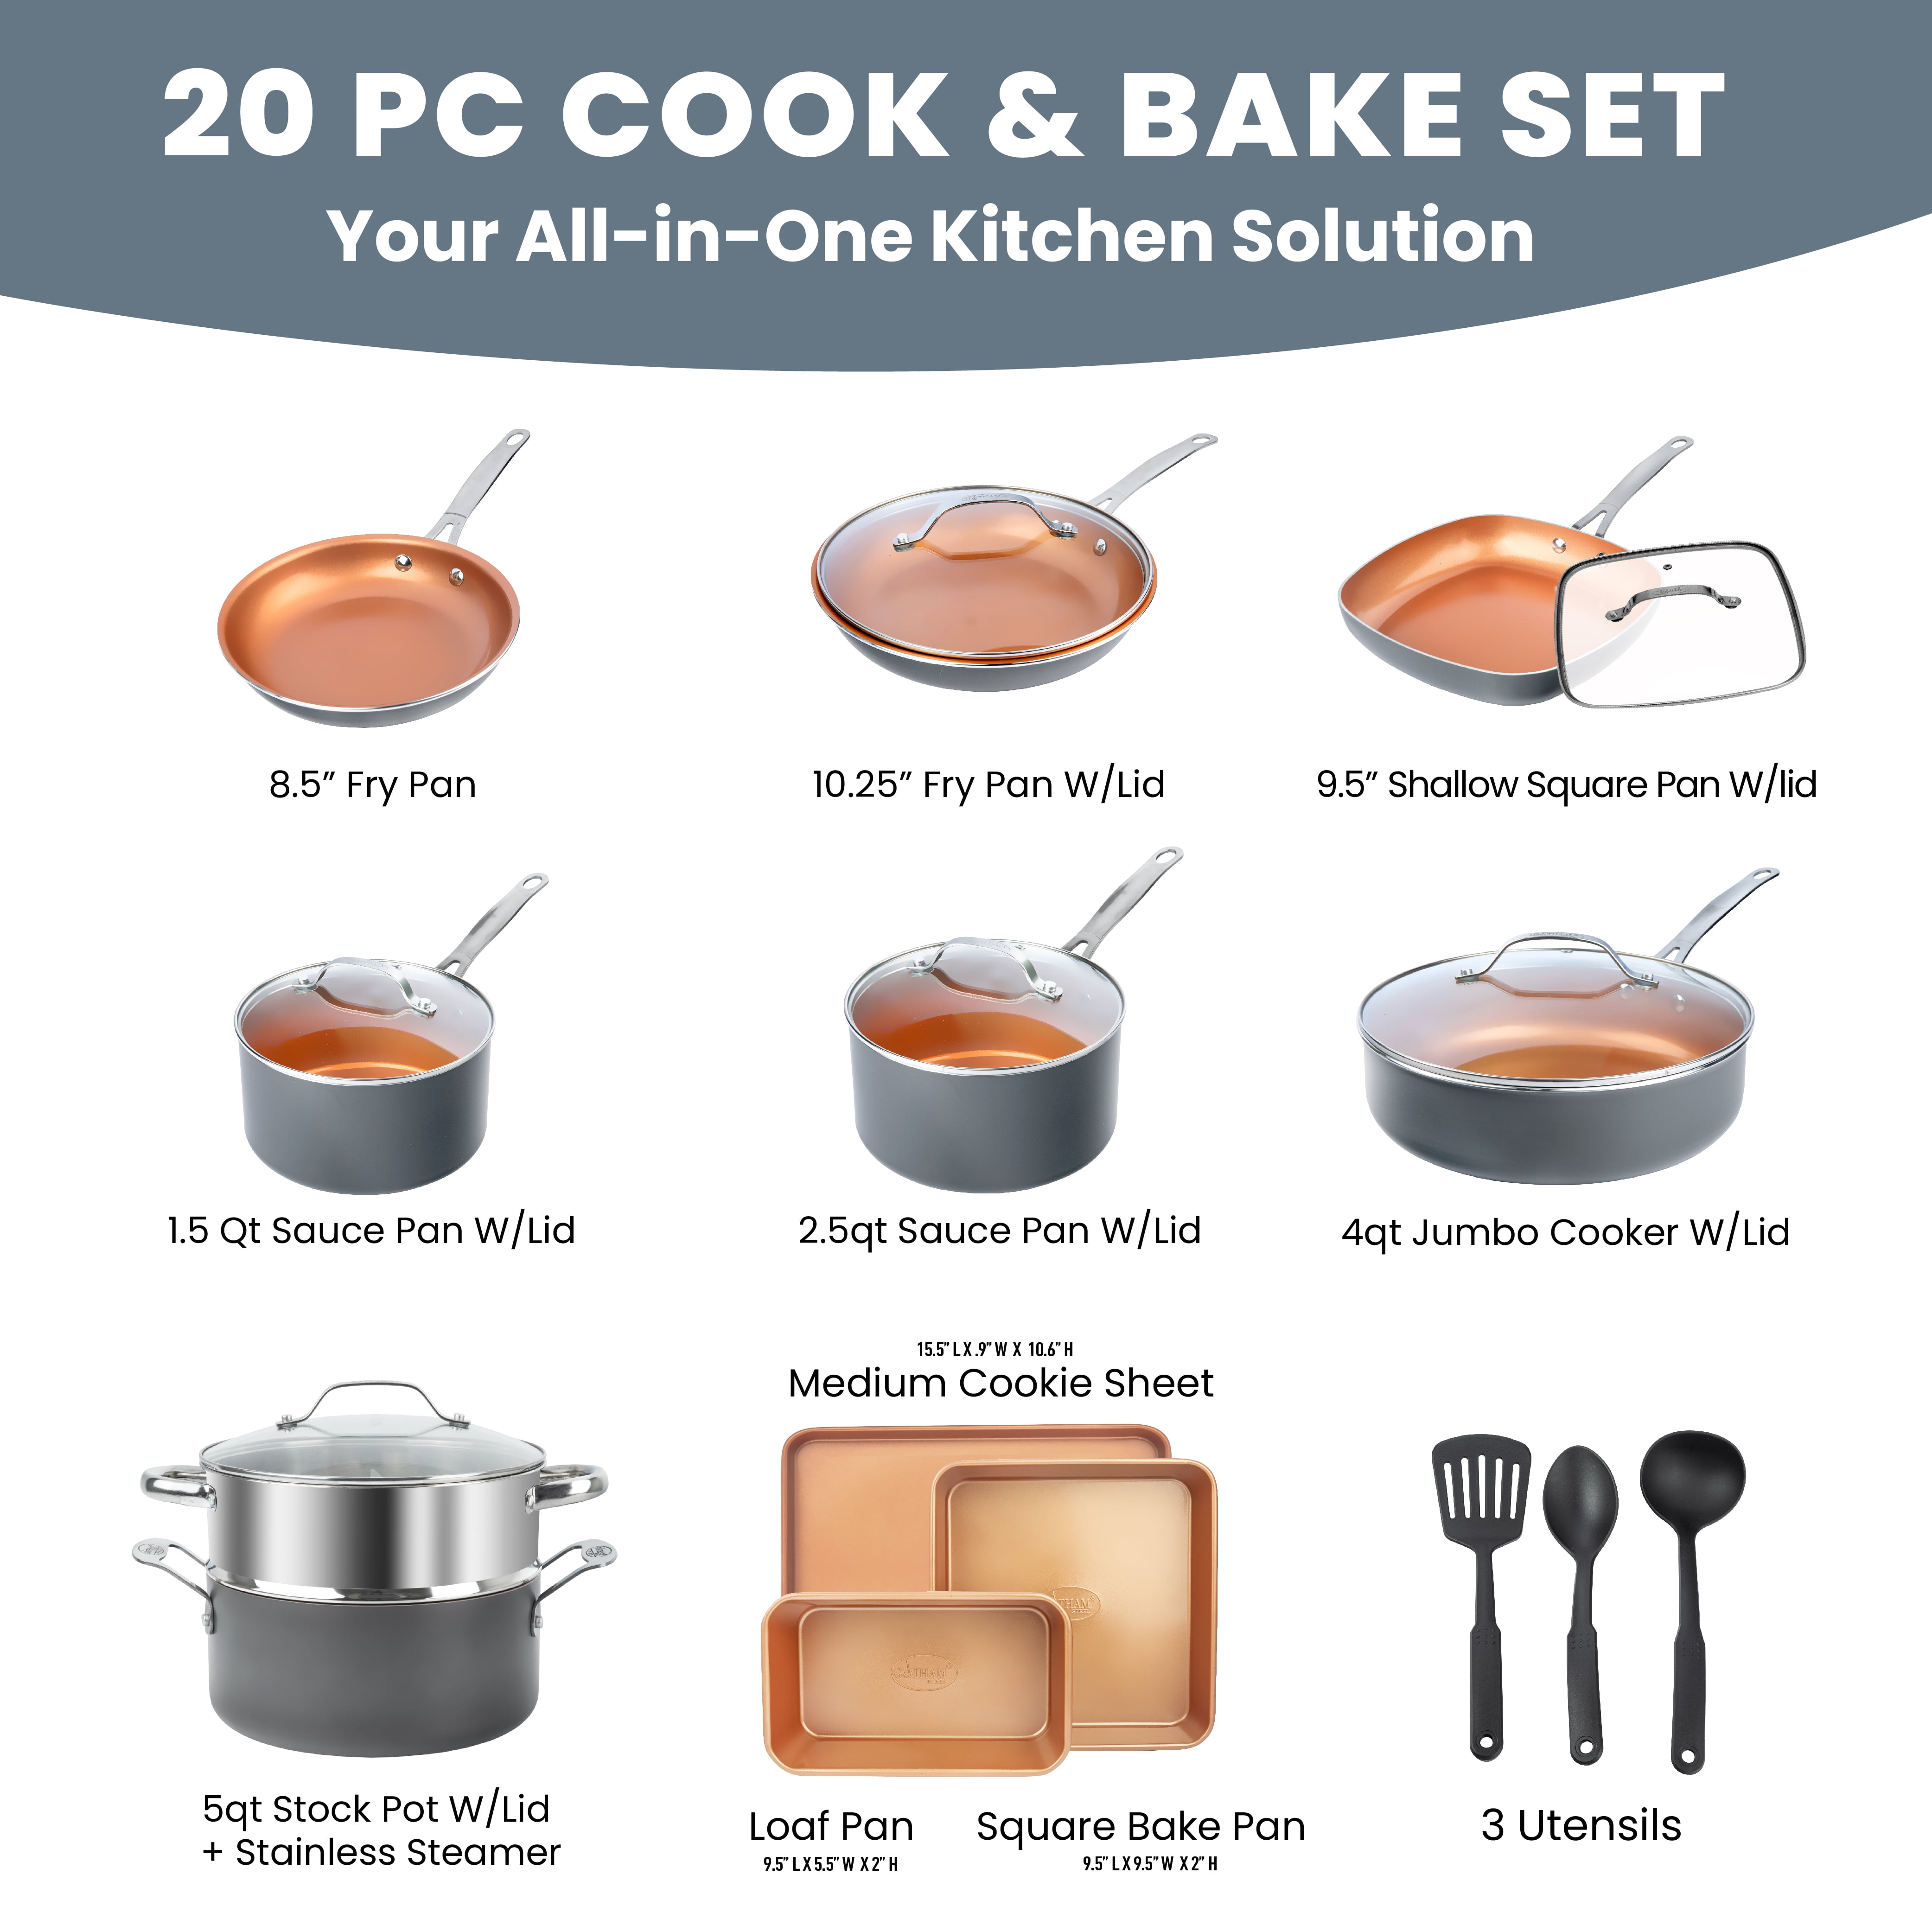 Gotham Steel 20-Piece Cookware and Bakeware Set in Graphite